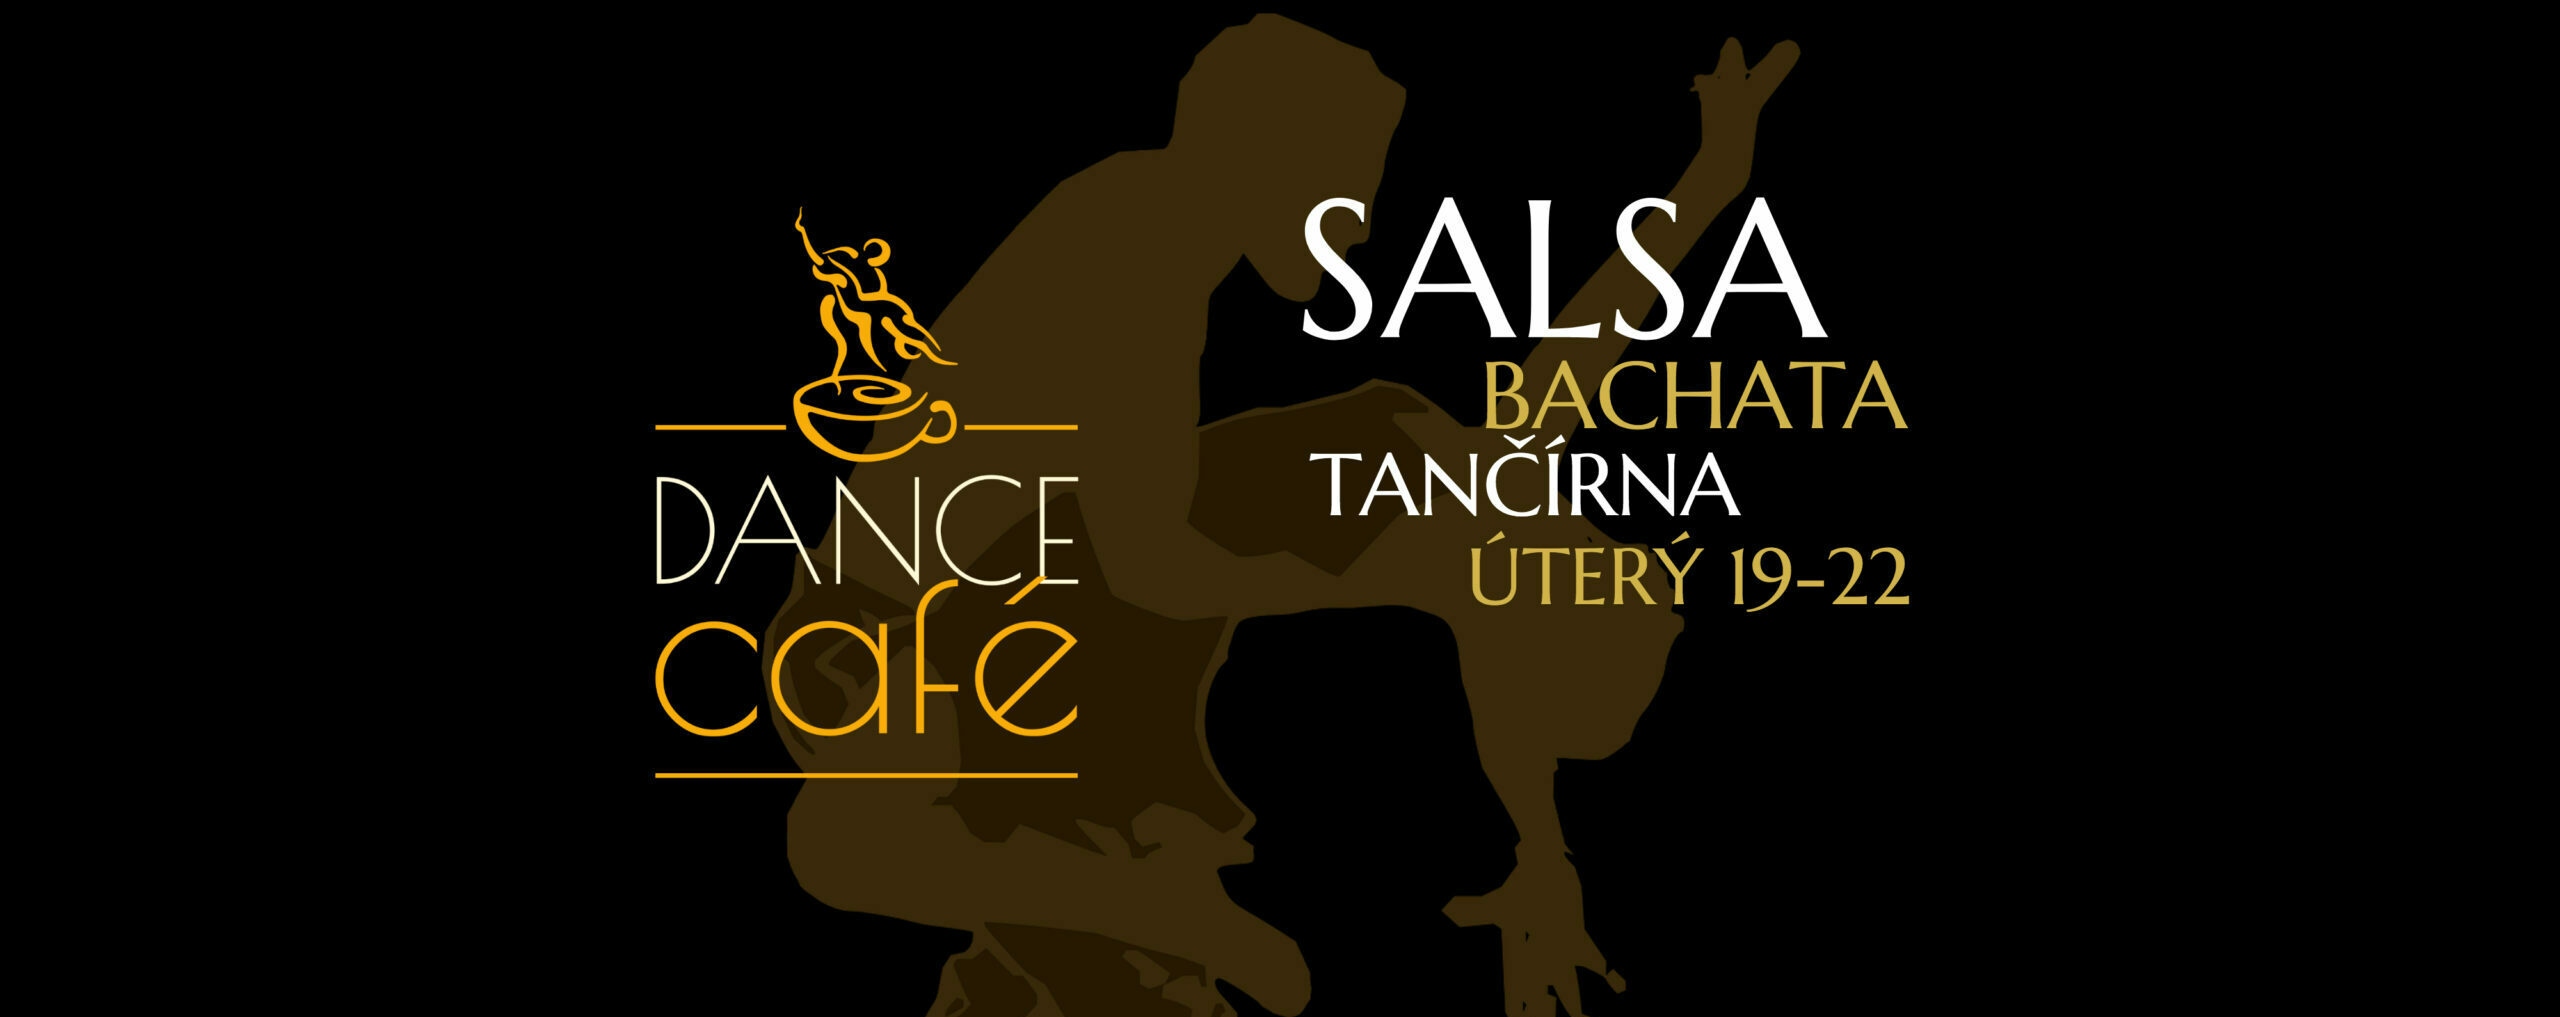 dance-cafe-tancirna-scaled-e1641174069409